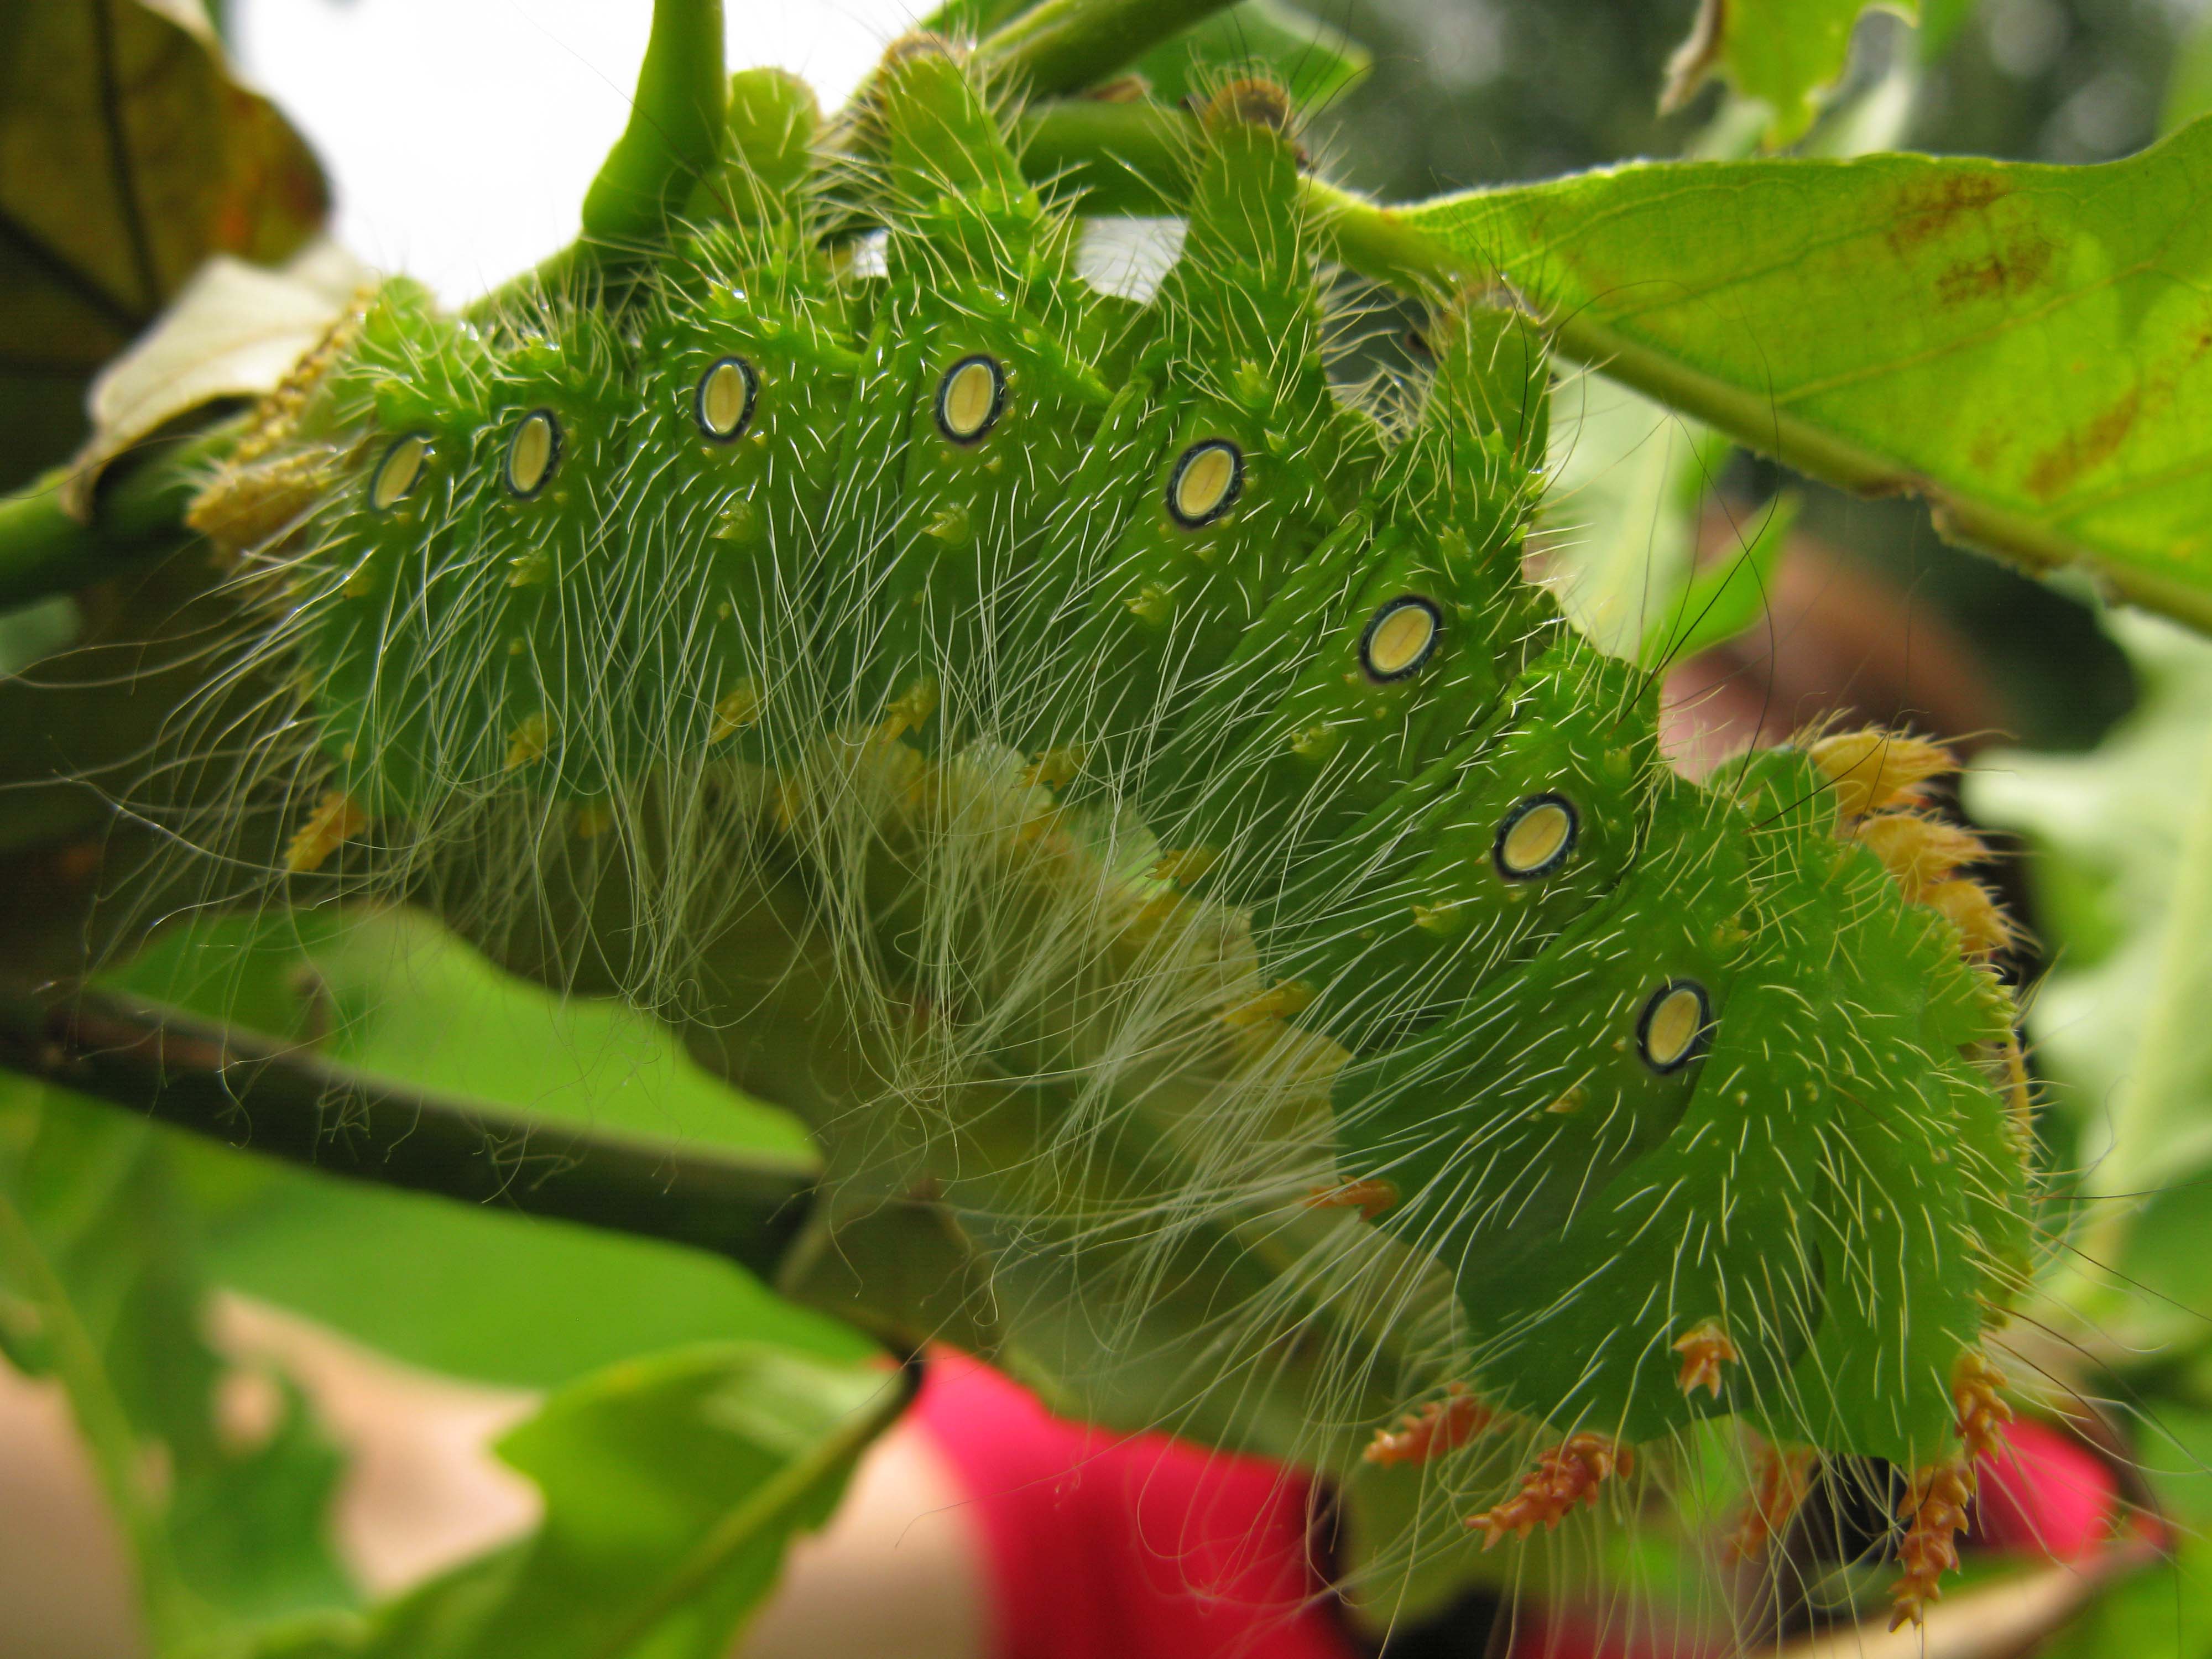 Burr Oak, imperial moth caterpillar